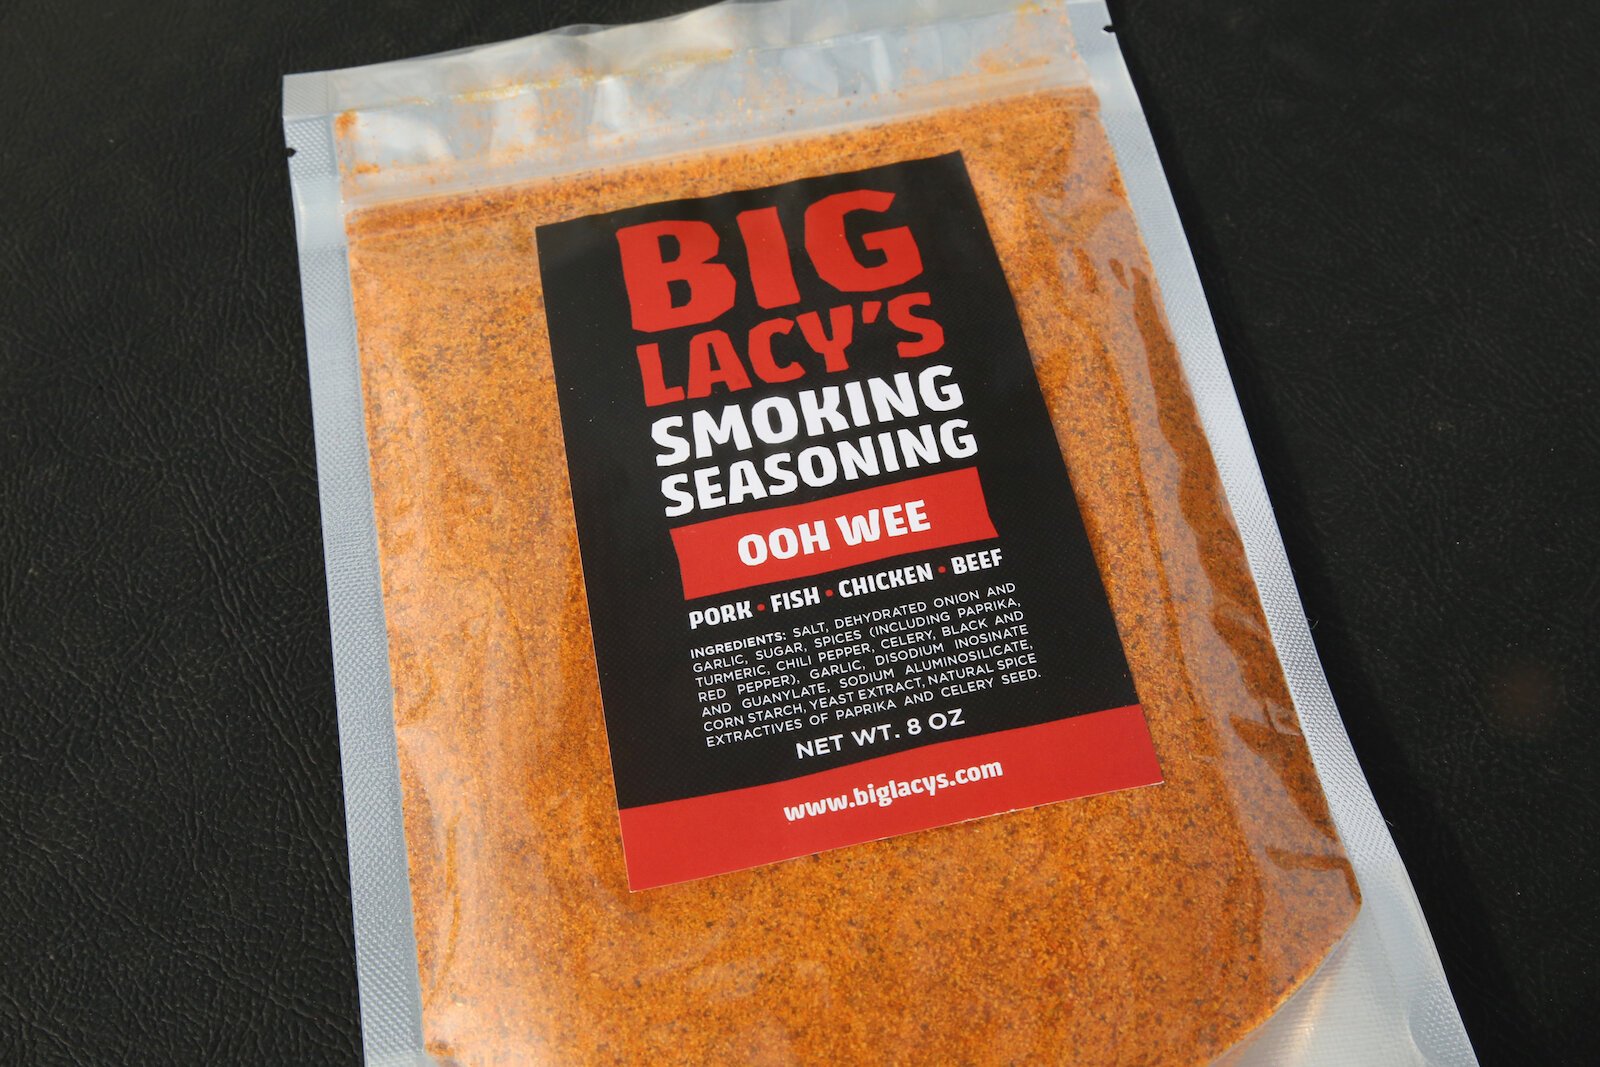 Big Lacy's Smoking Seasoning is available at Neighborhood Smokehouse, Visit Fort Wayne, and Pio Market.